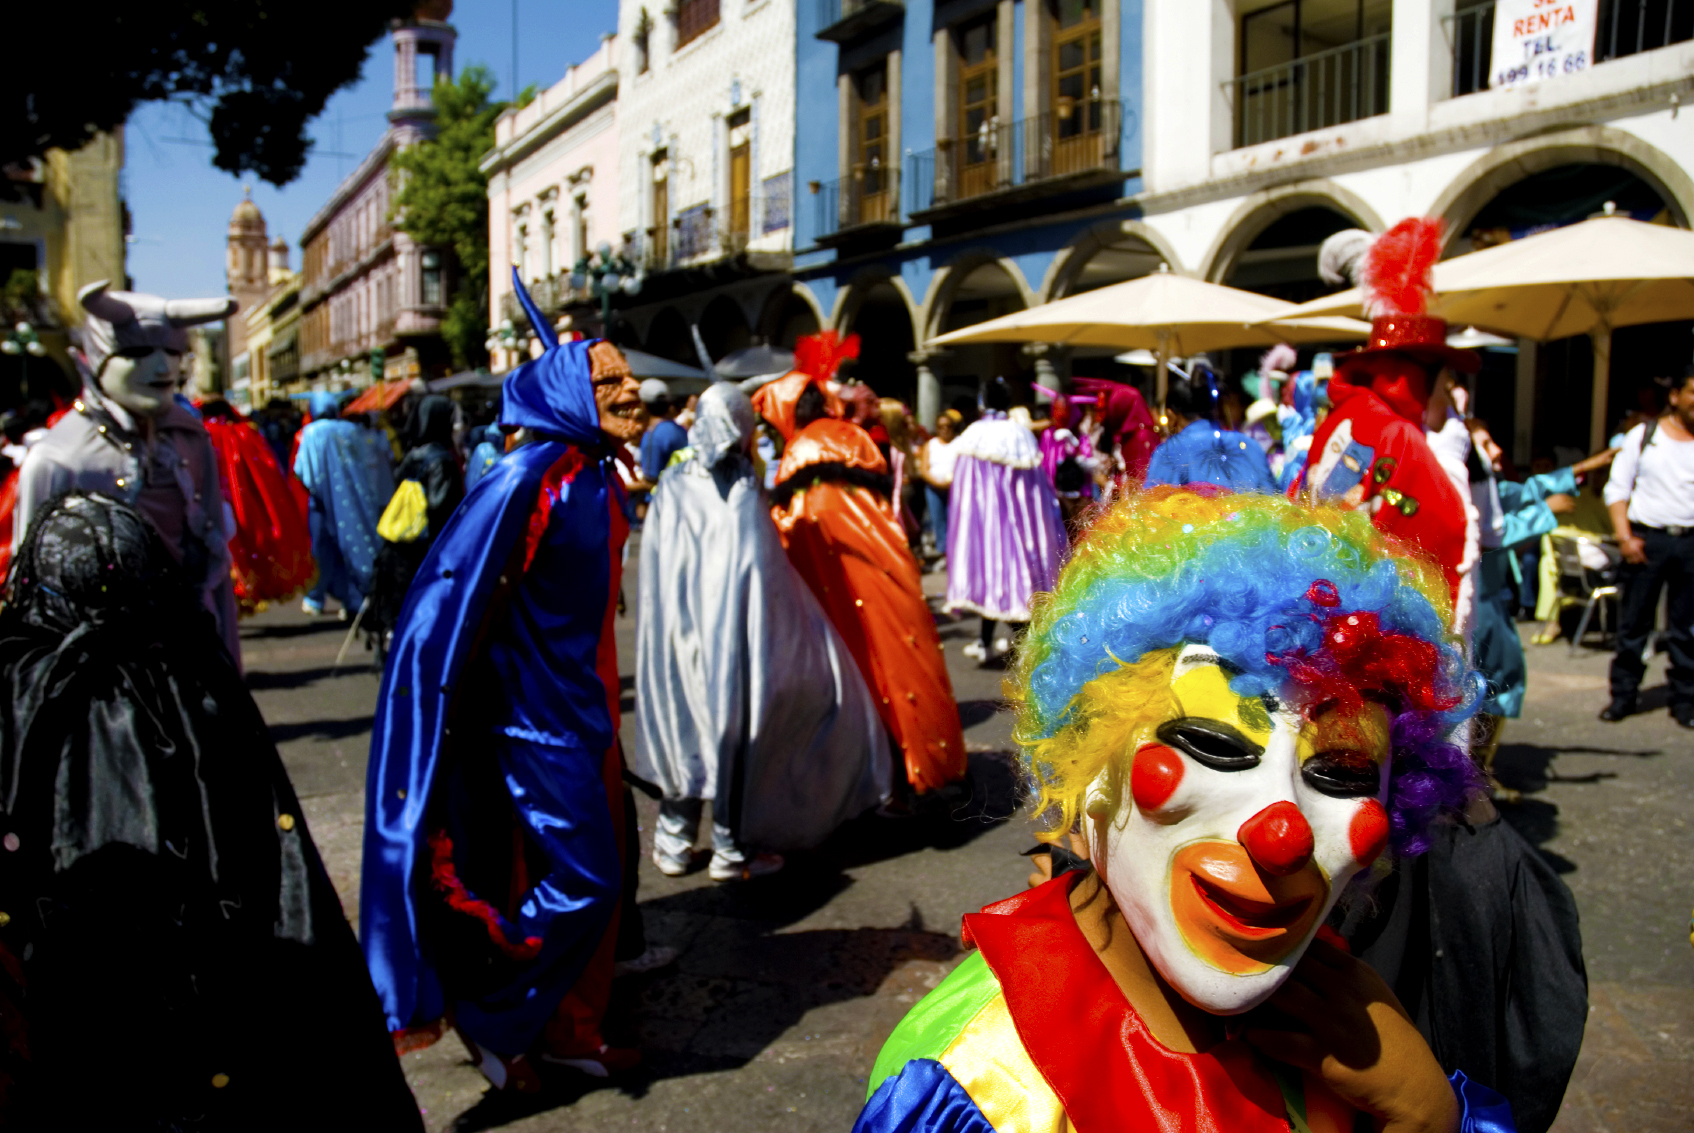 Carnival scenes. Мексика карнавал. Brazilian Culture and tradition.